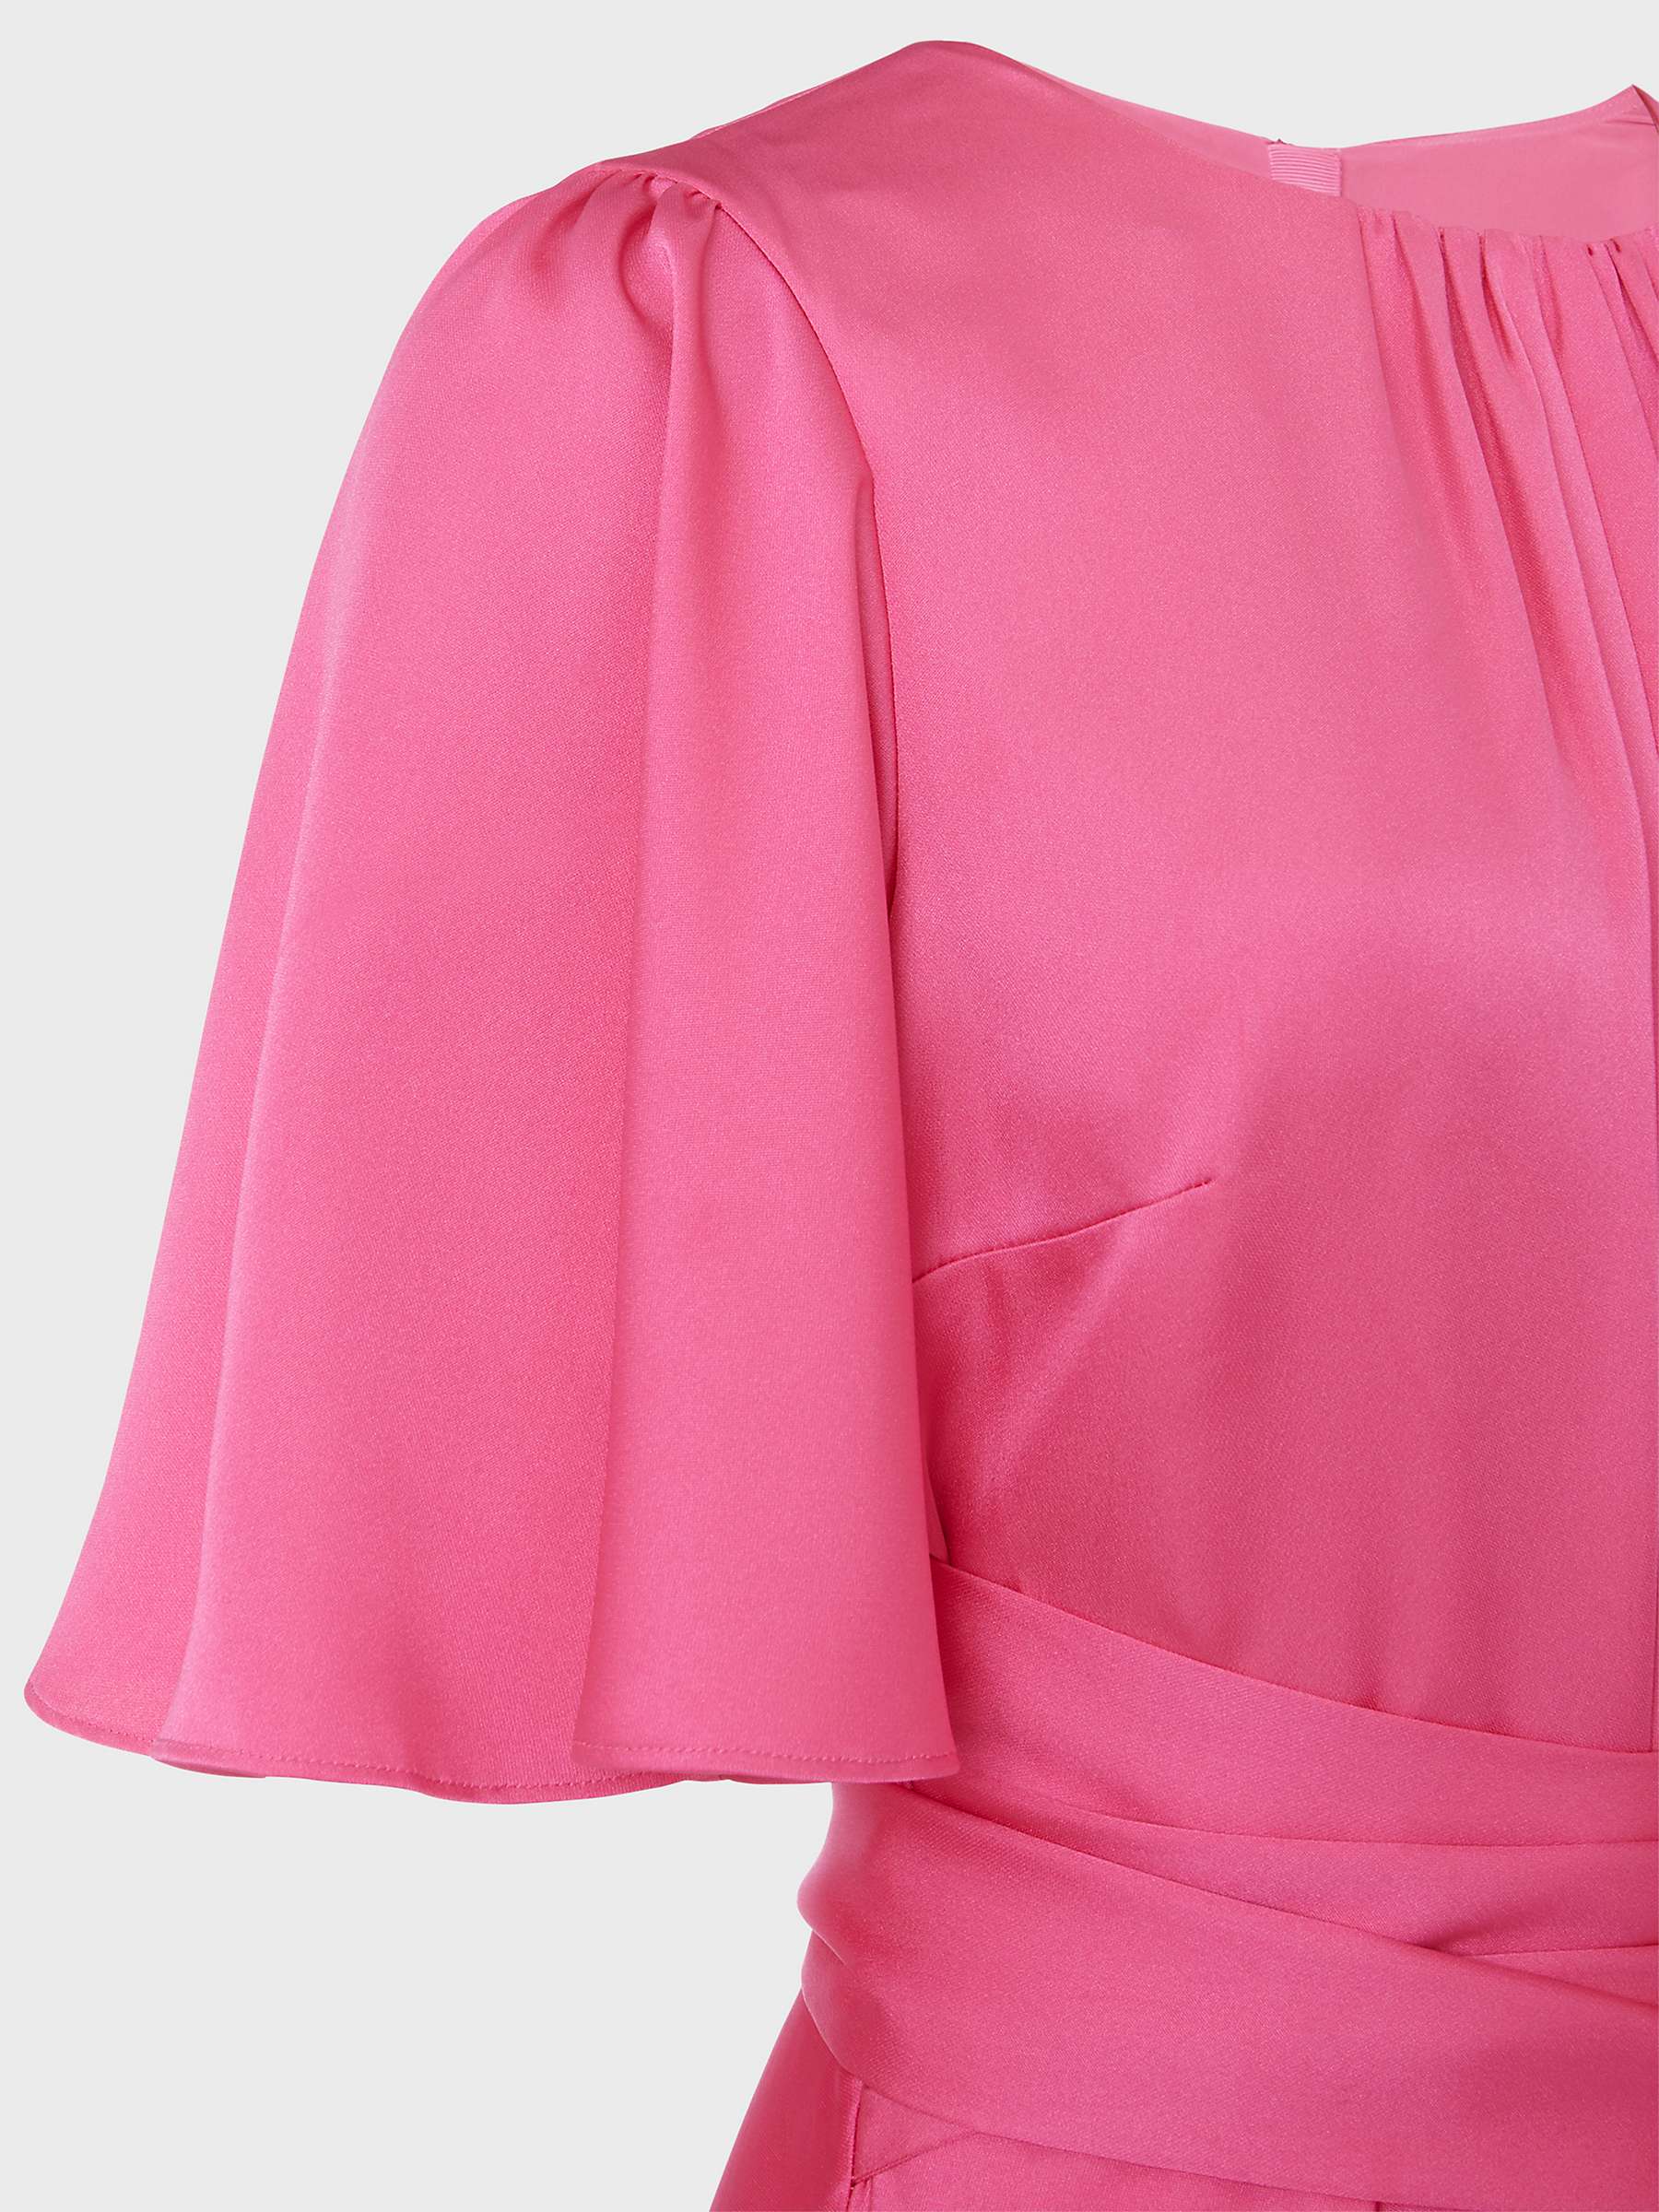 Buy Hobbs Orelia Plain Dress, Party Pink Online at johnlewis.com